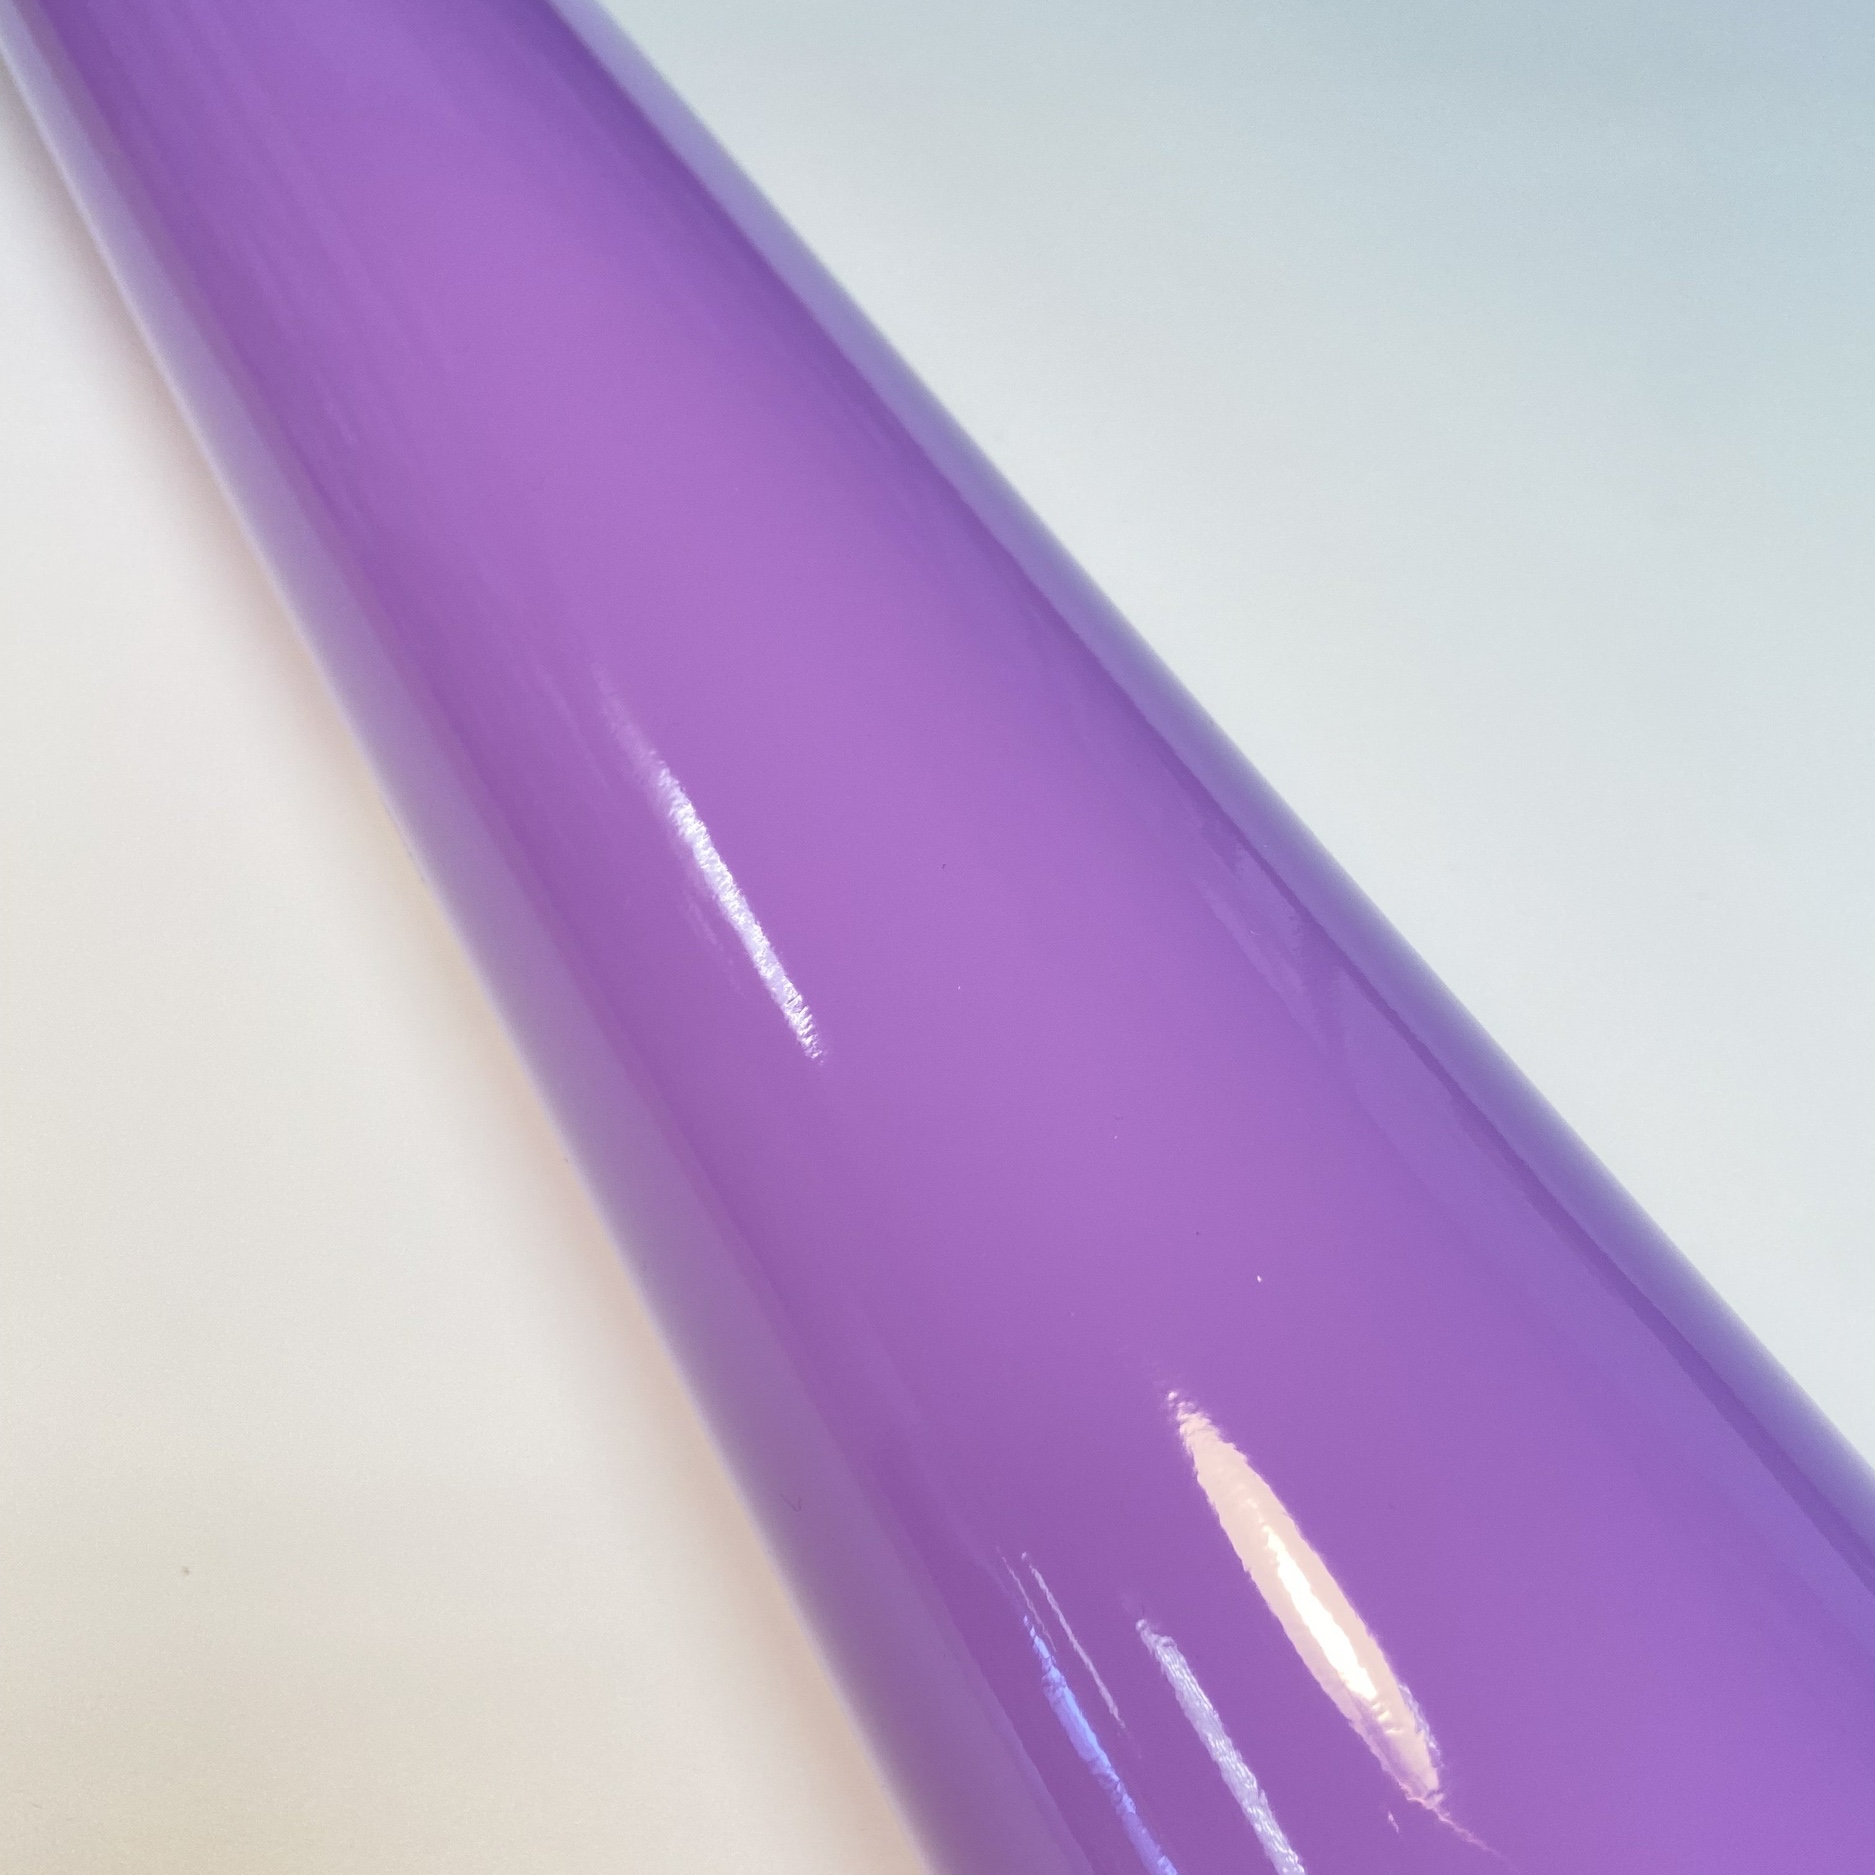 revetement-adhesif-violet-clair-lilas-lavande-brillant-laque-miroir